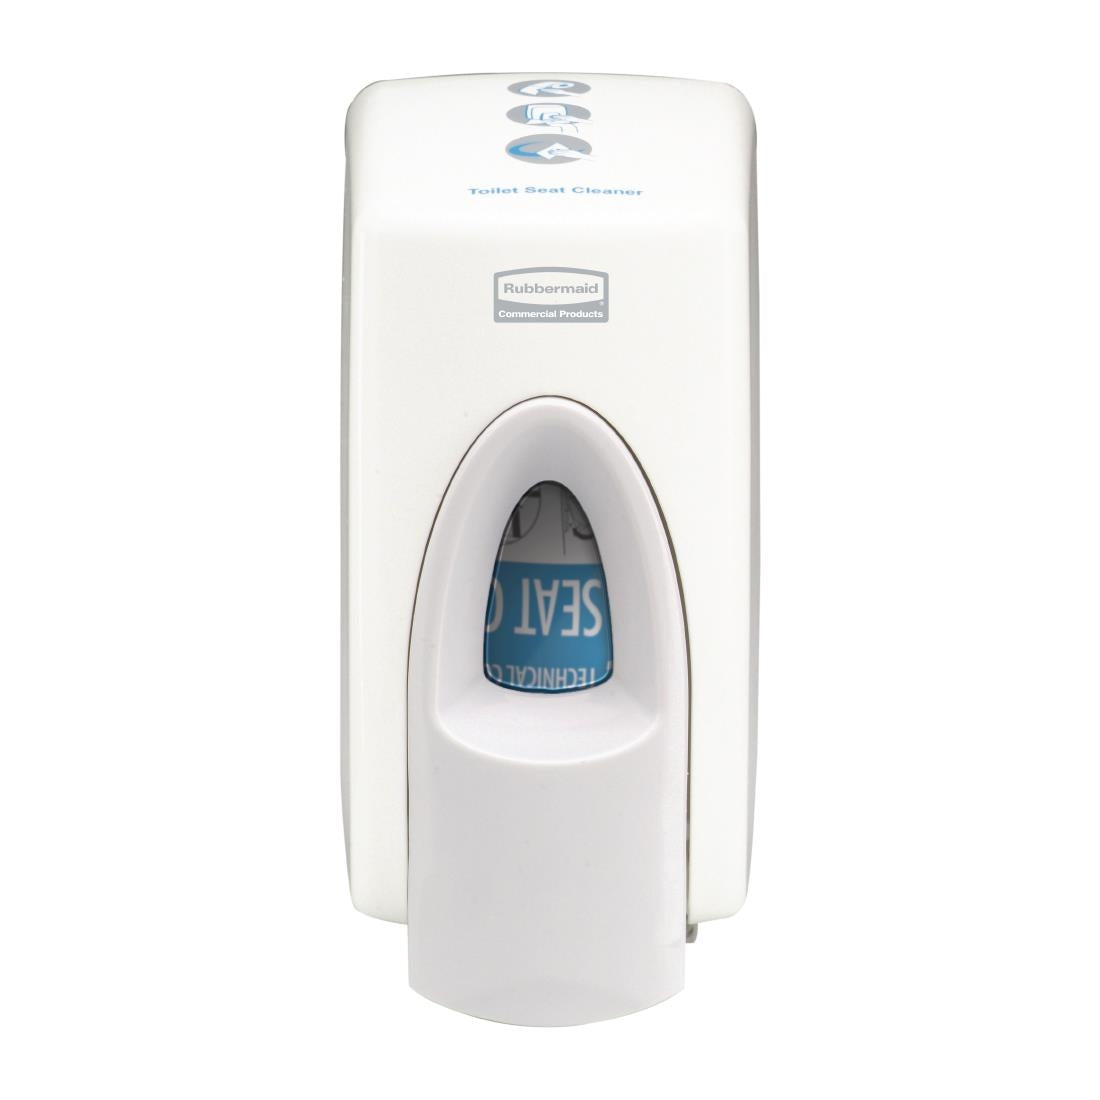 FN398 Rubbermaid Toilet Seat Cleaner Dispenser 400ml JD Catering Equipment Solutions Ltd